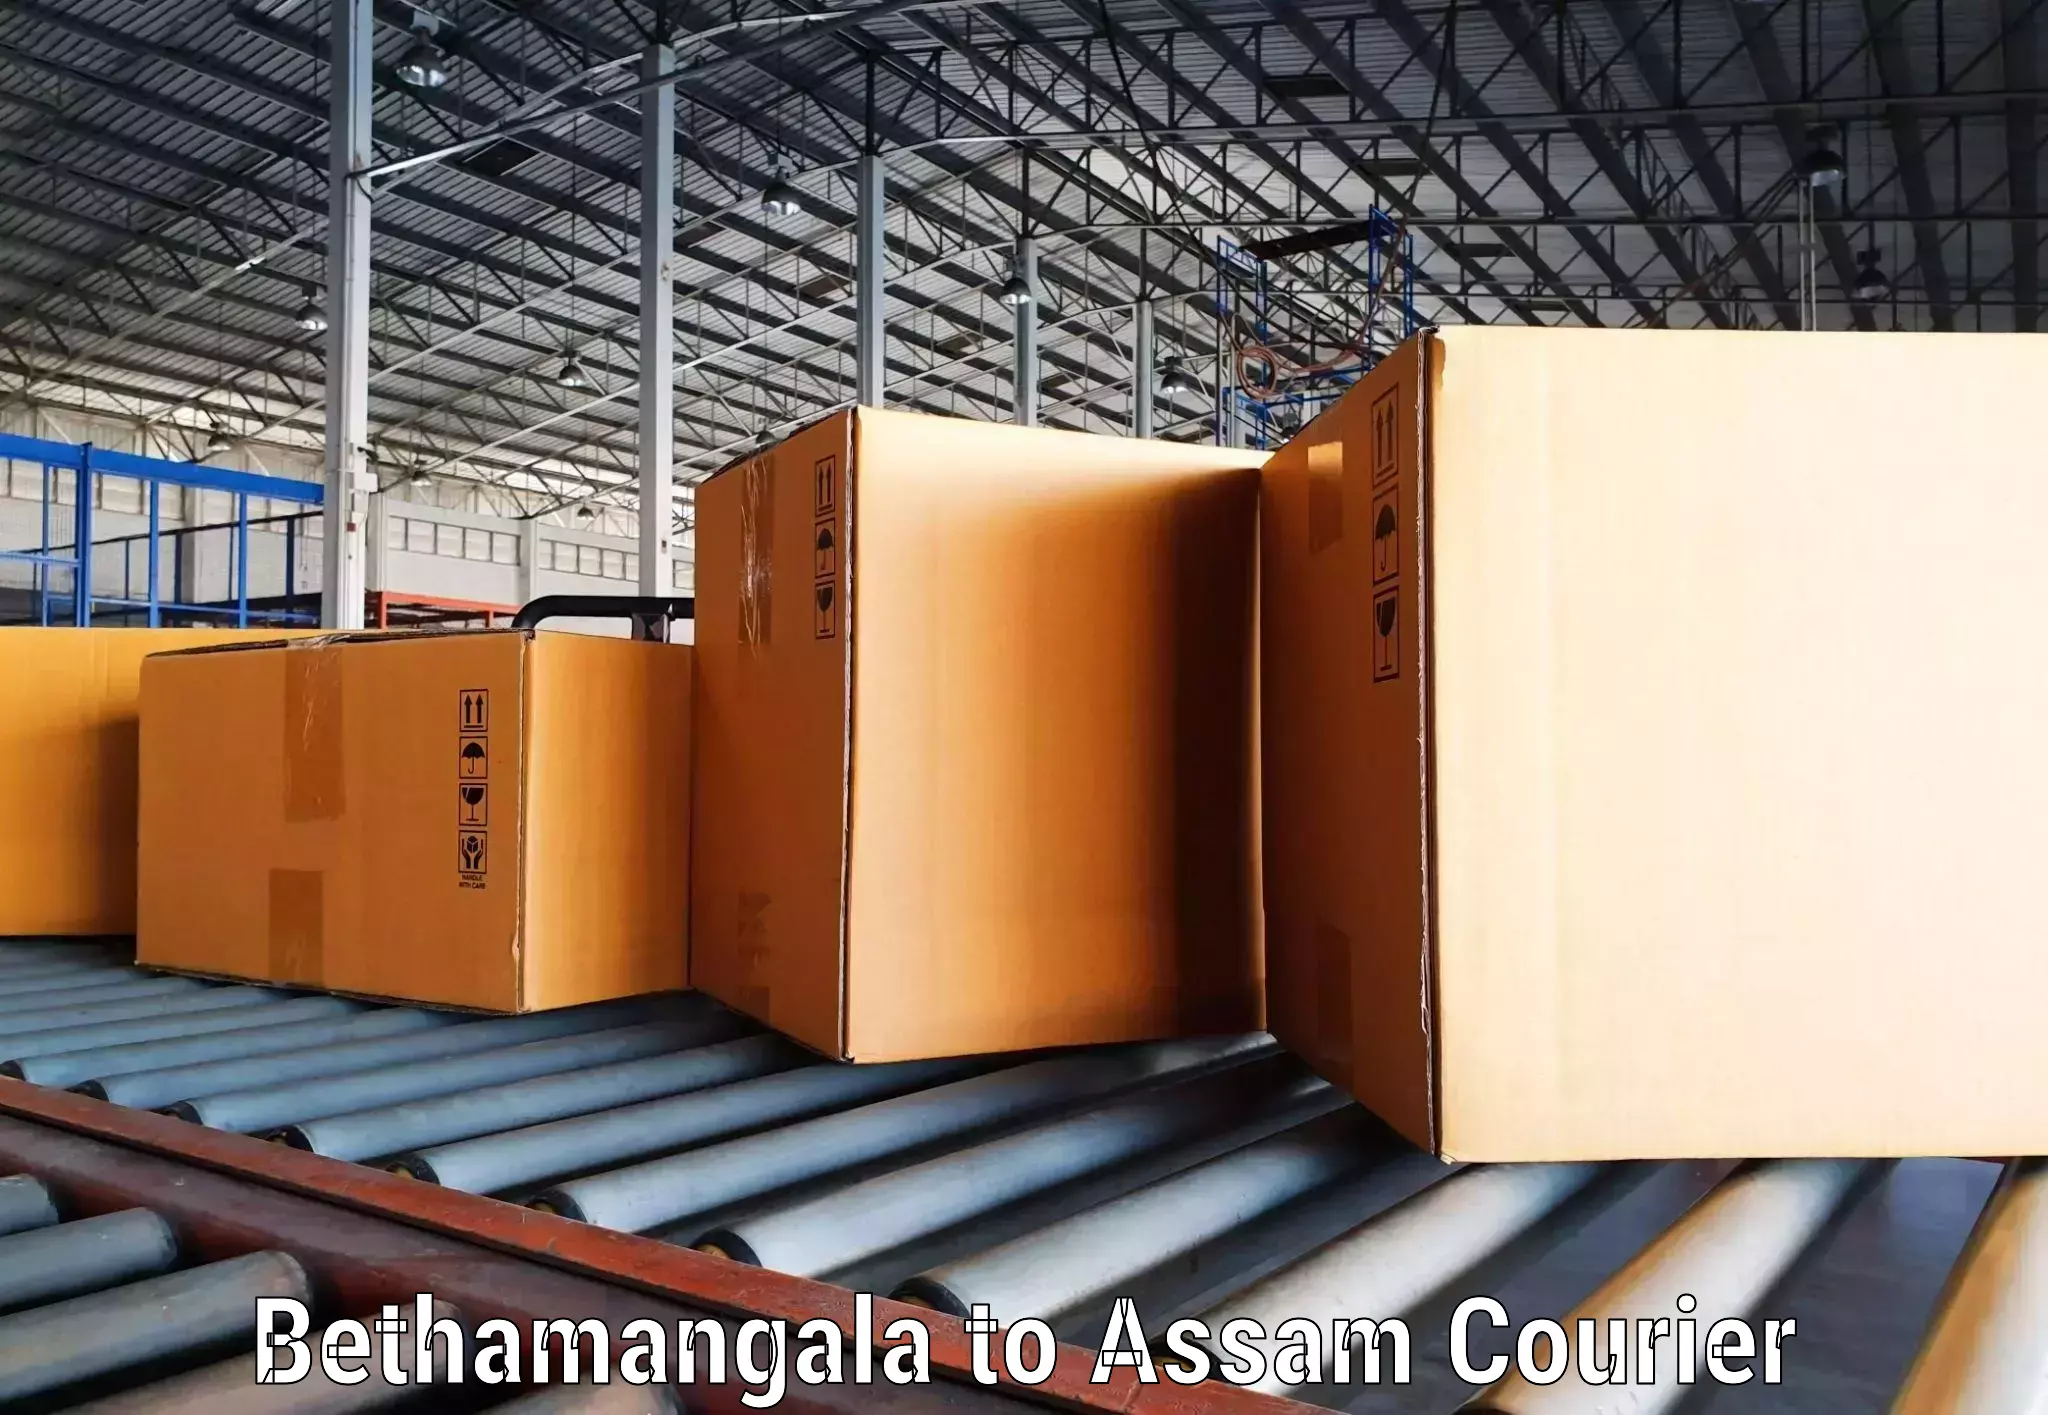 Courier service comparison Bethamangala to Chabua